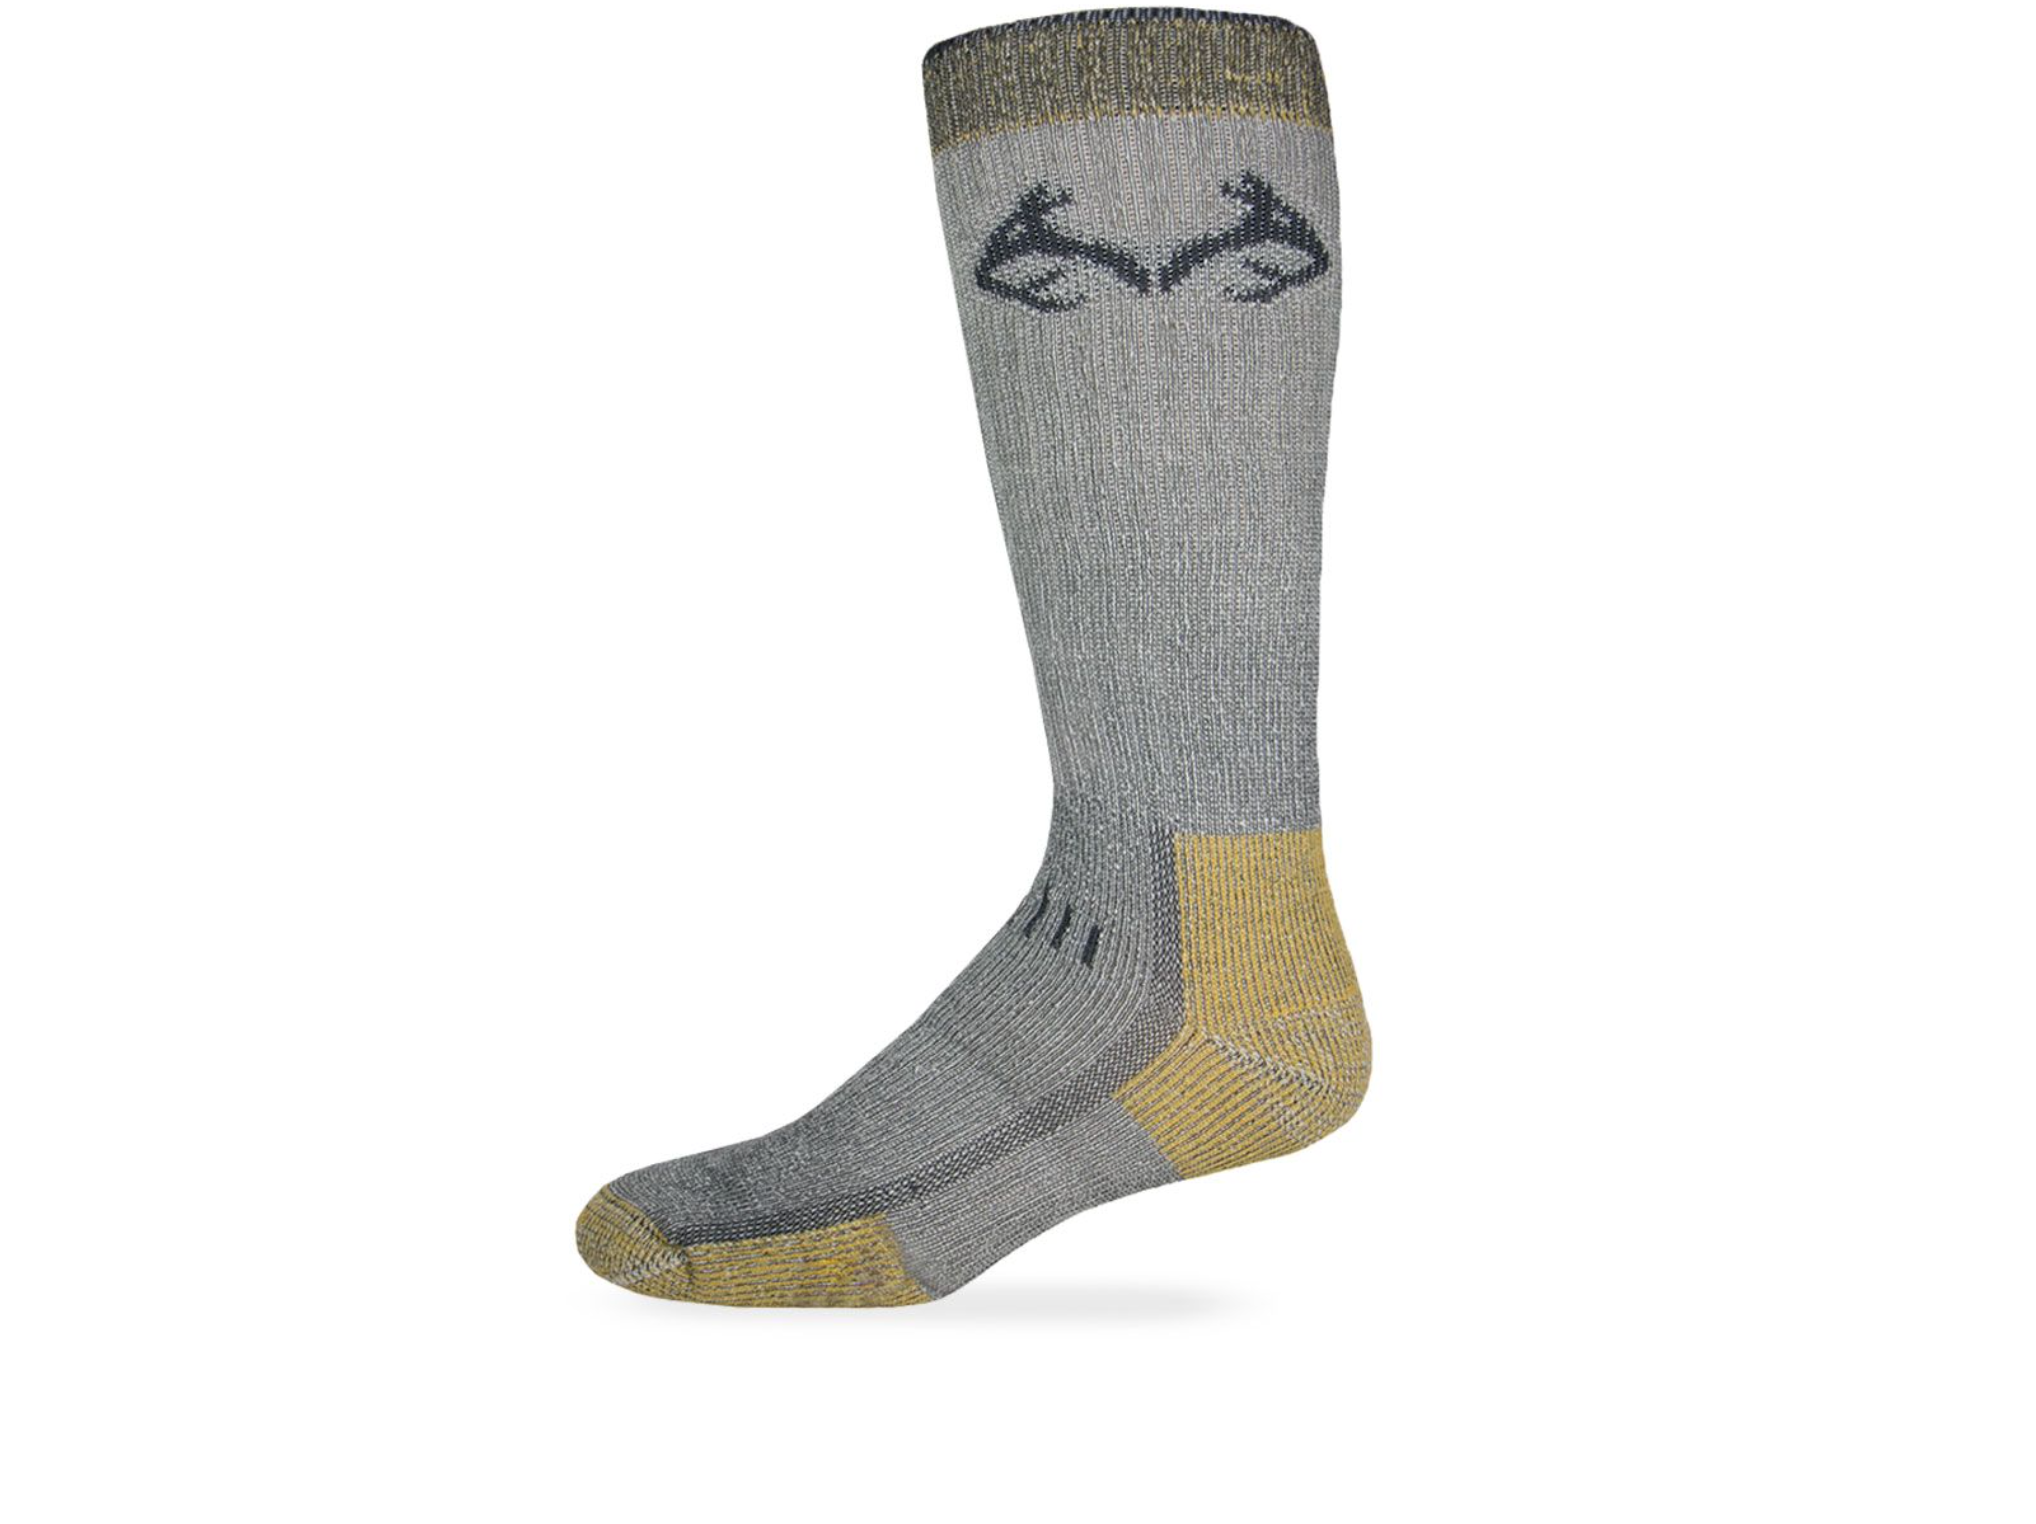 Realtree 80% Merino Wool Uplander Crew Boot Socks 1 Pair